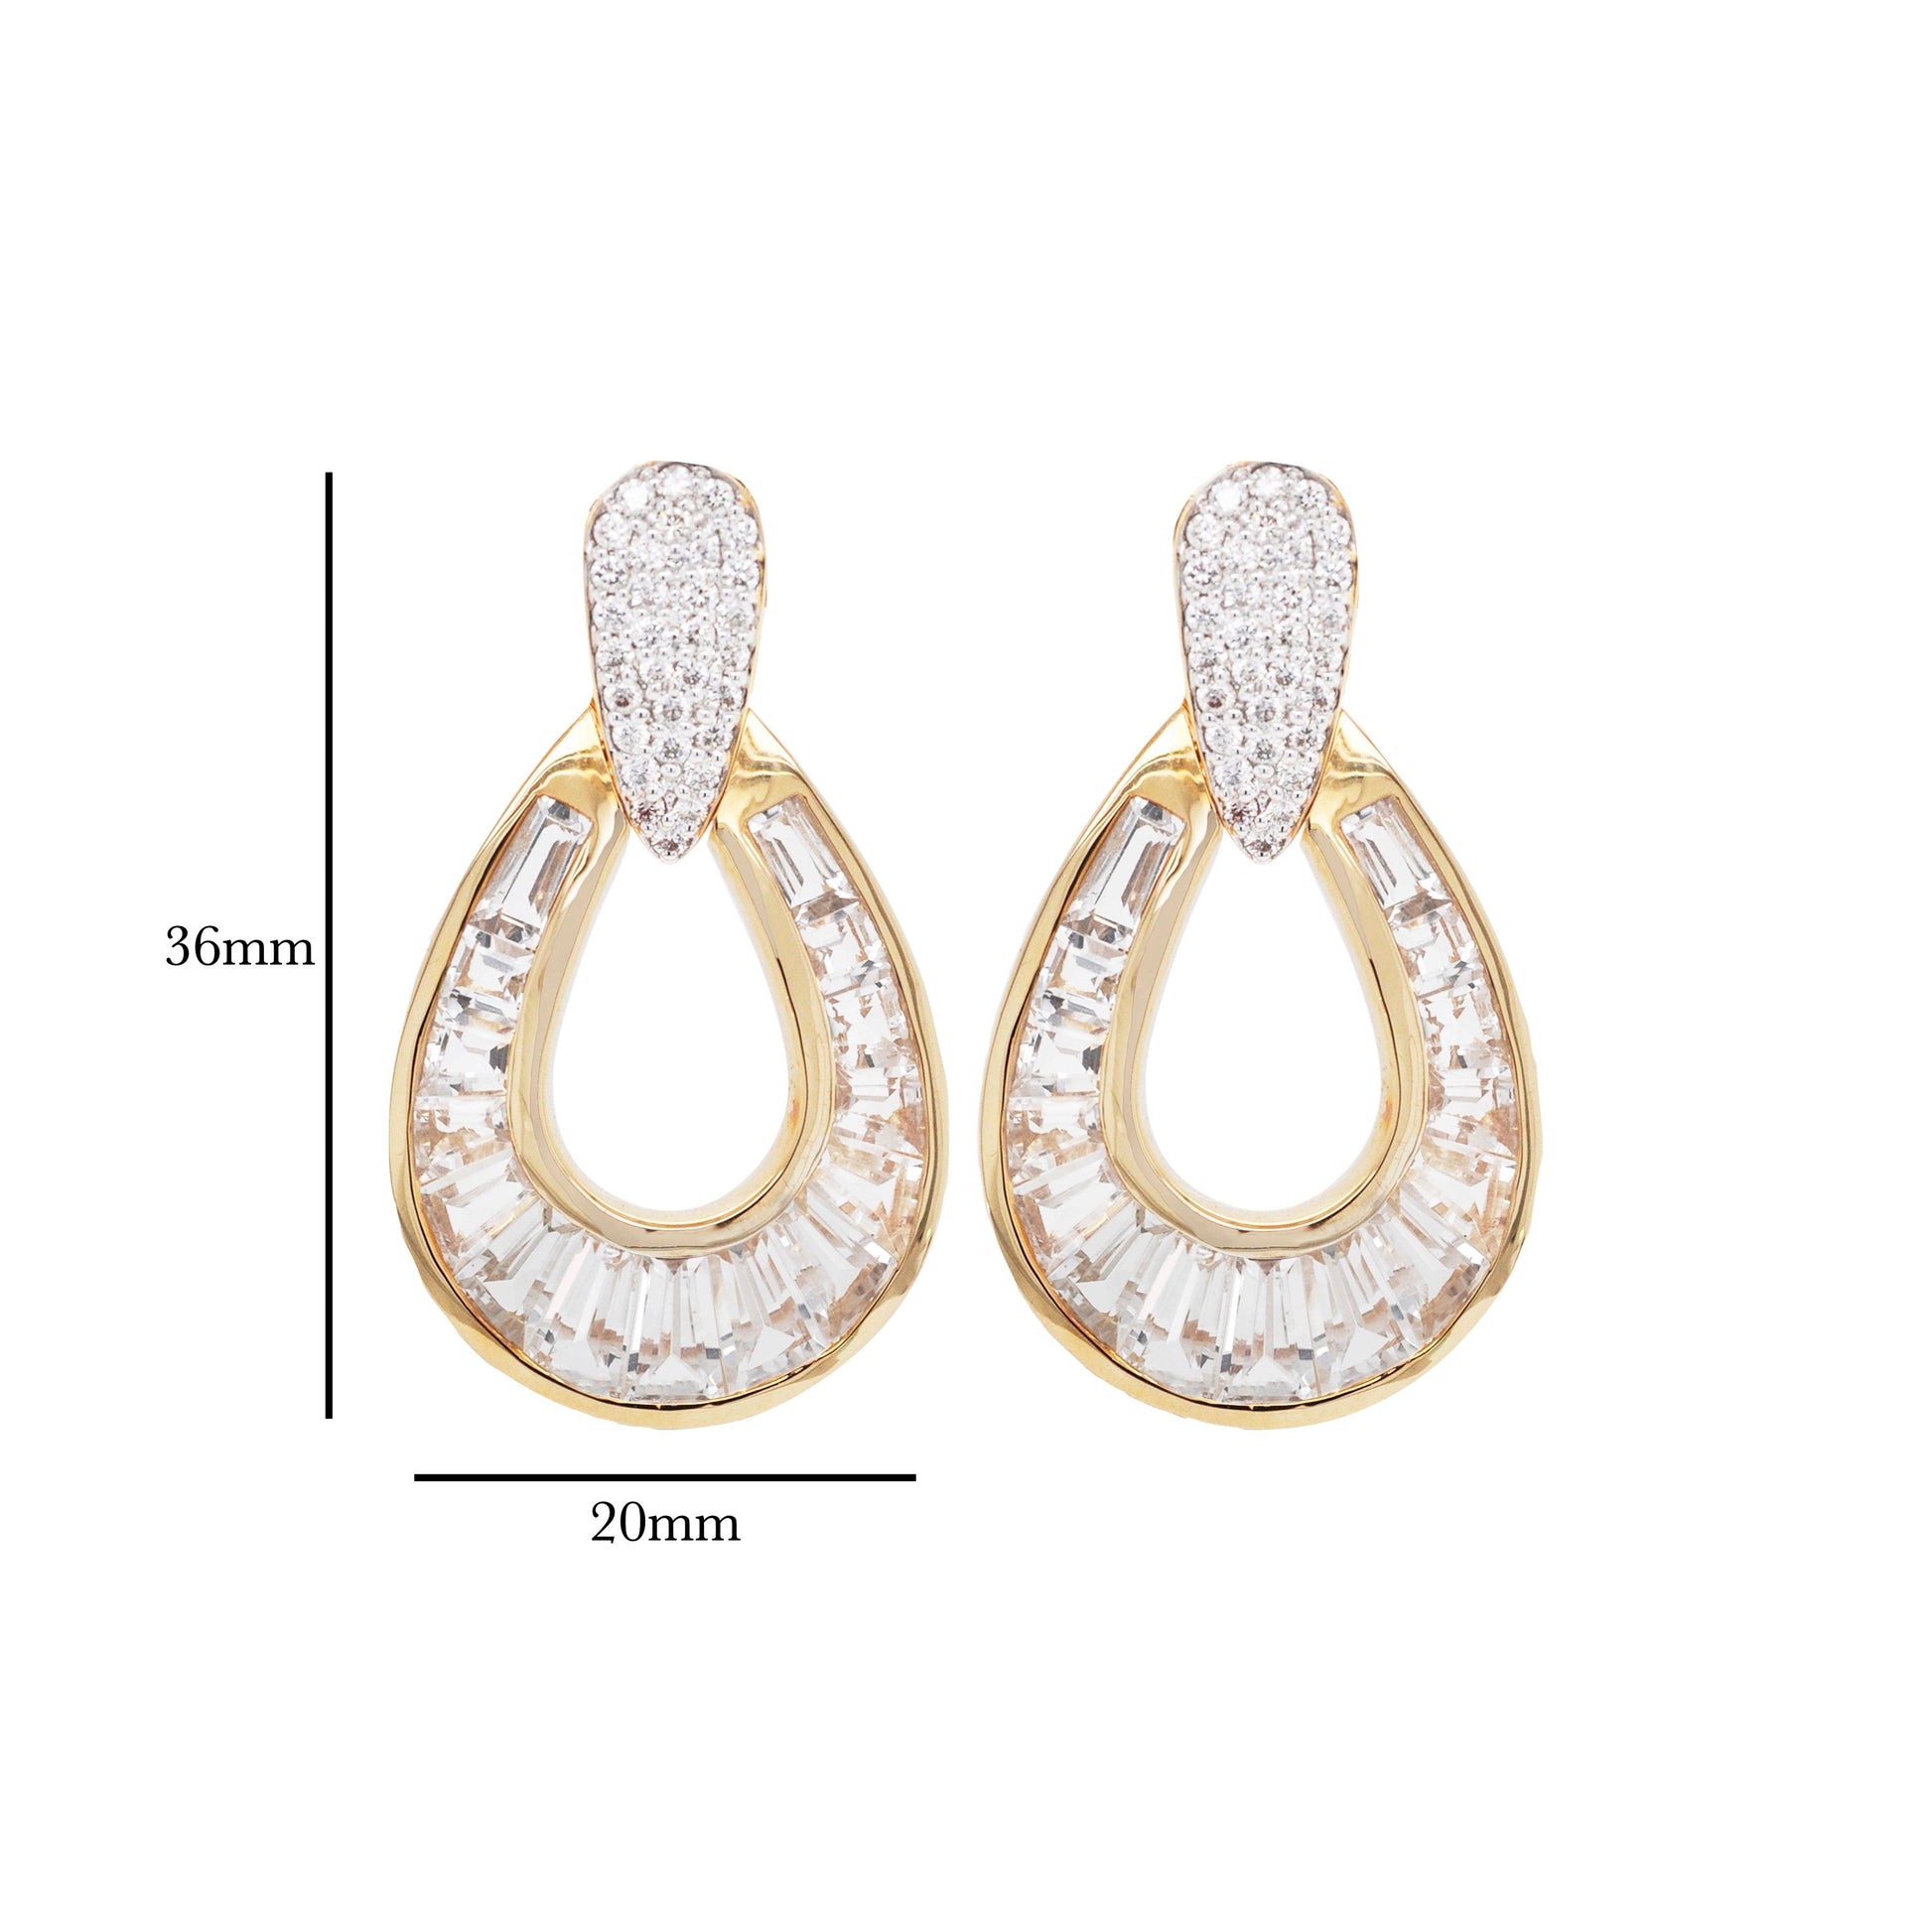 18K Gold White Topaz Diamond Raindrop Earrings - Vaibhav Dhadda Jewelry